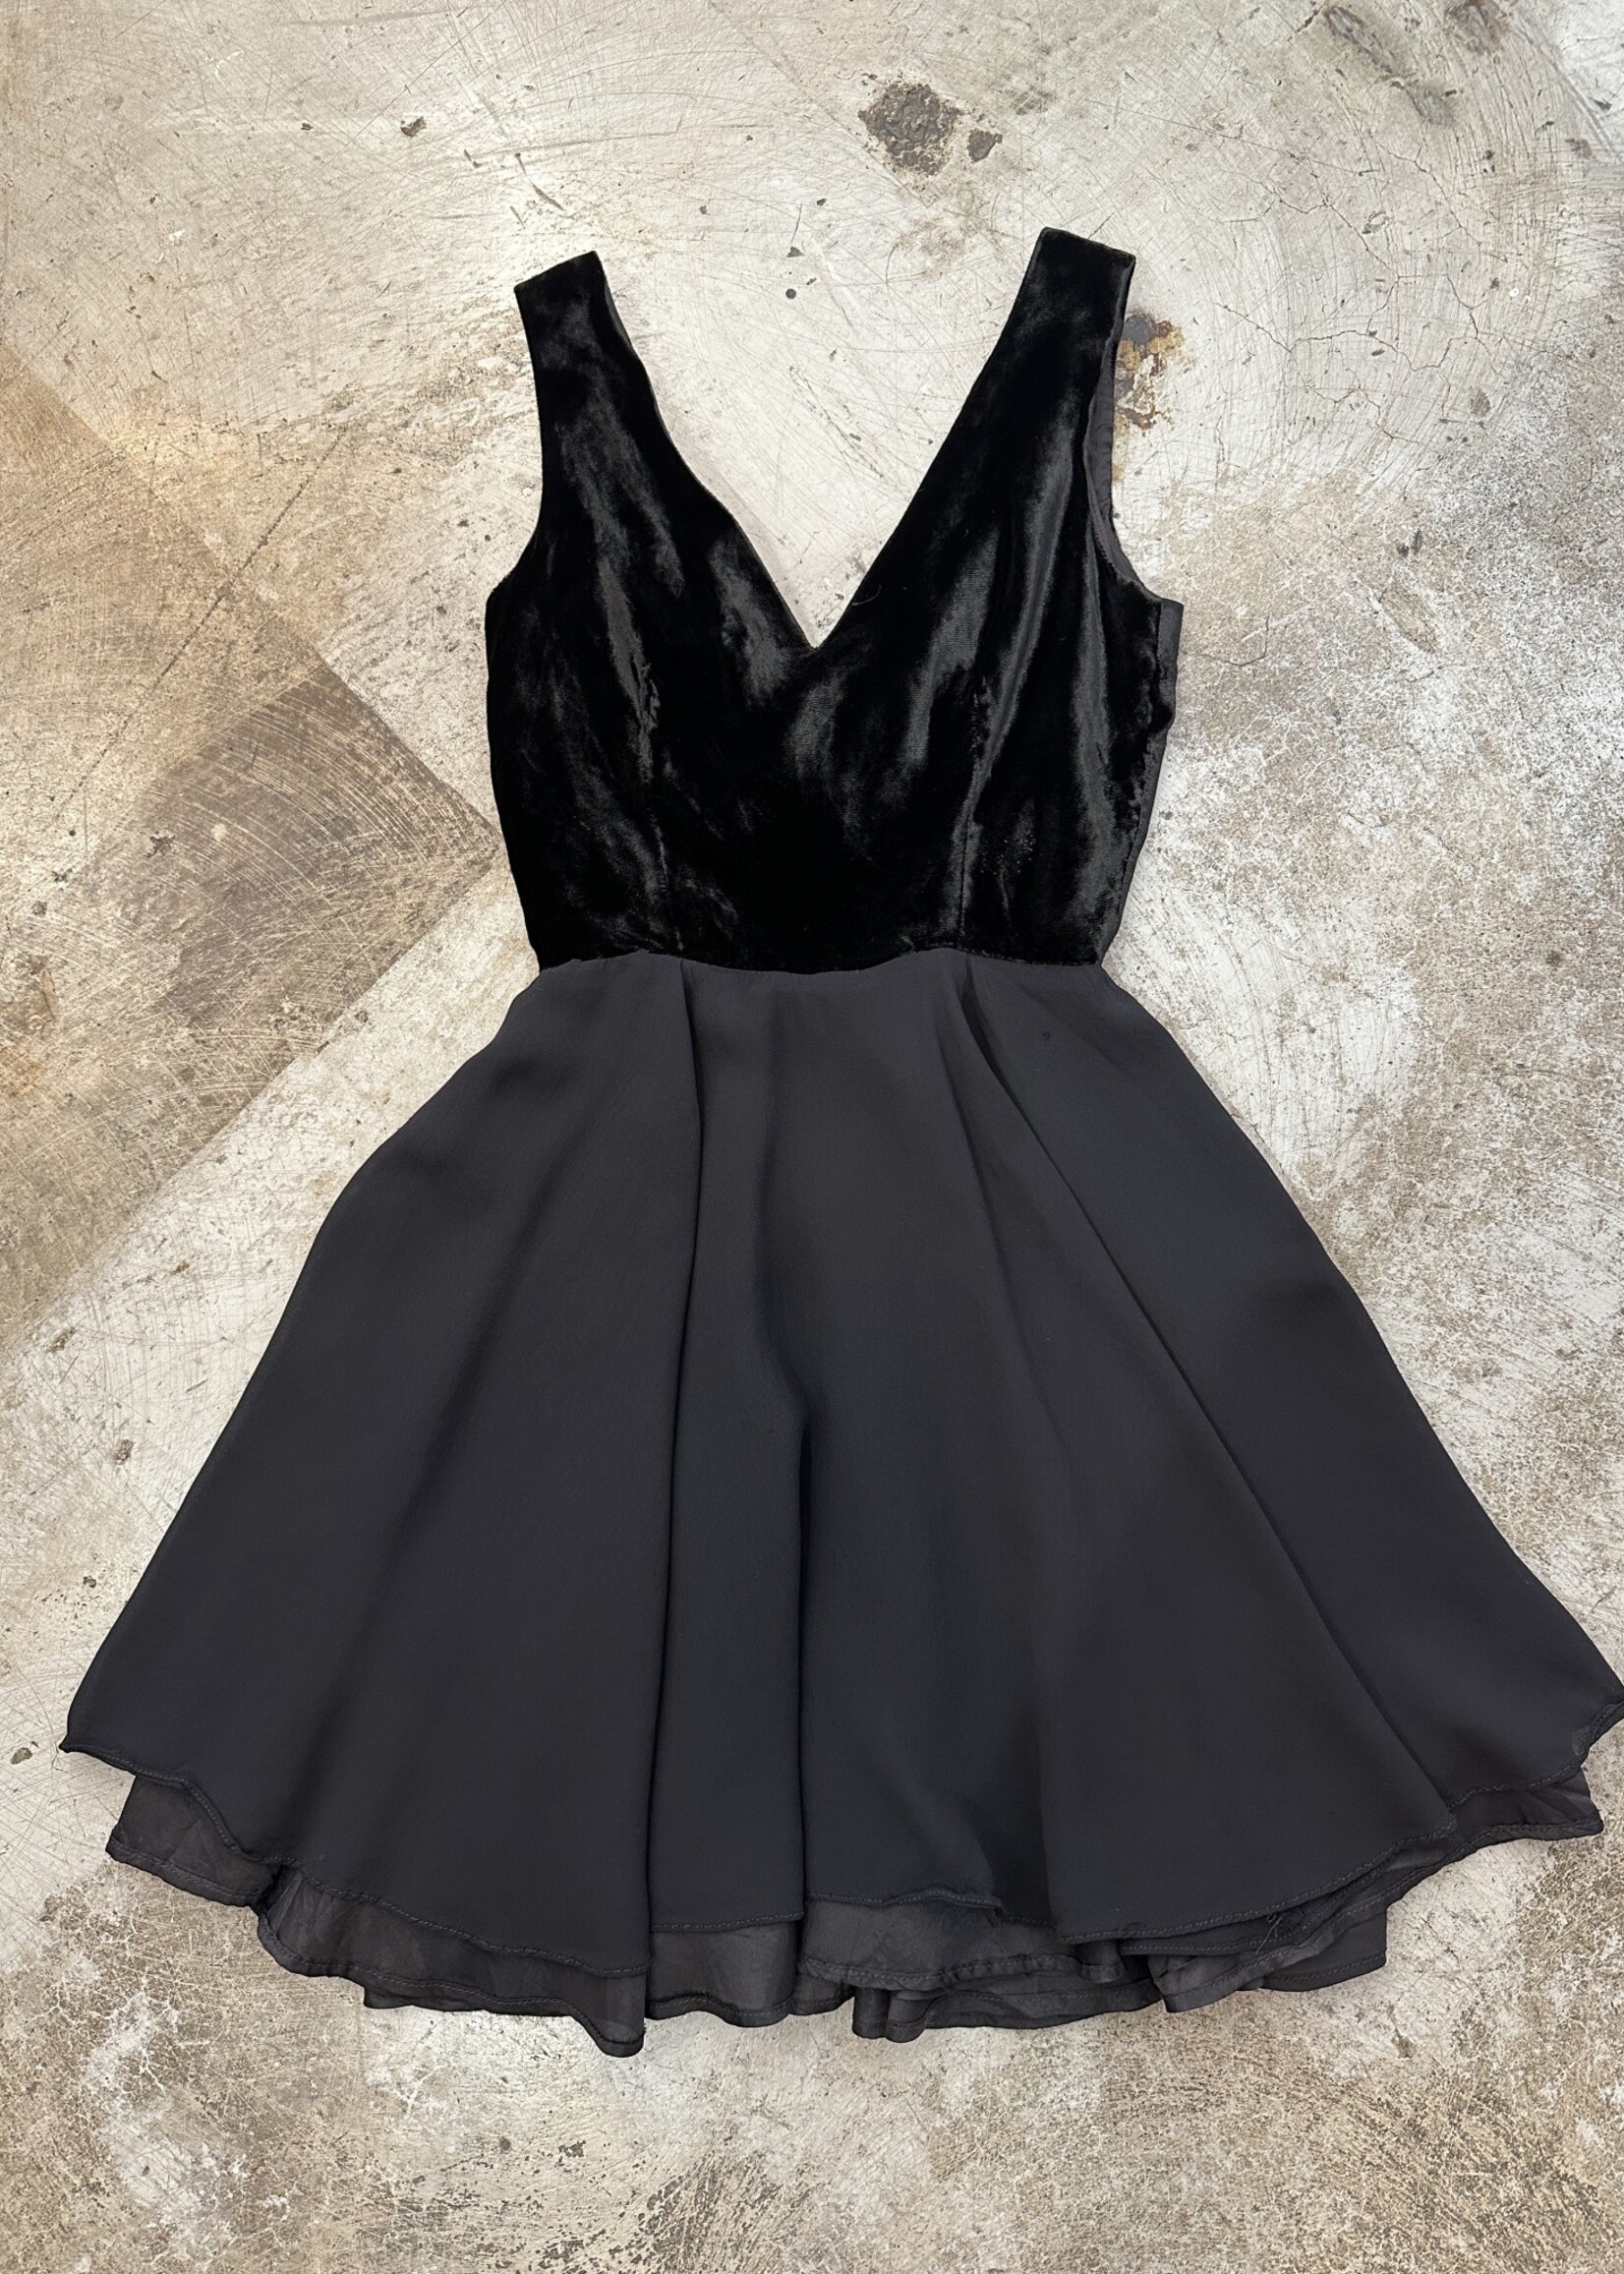 Smica Vintage Black Dress XS